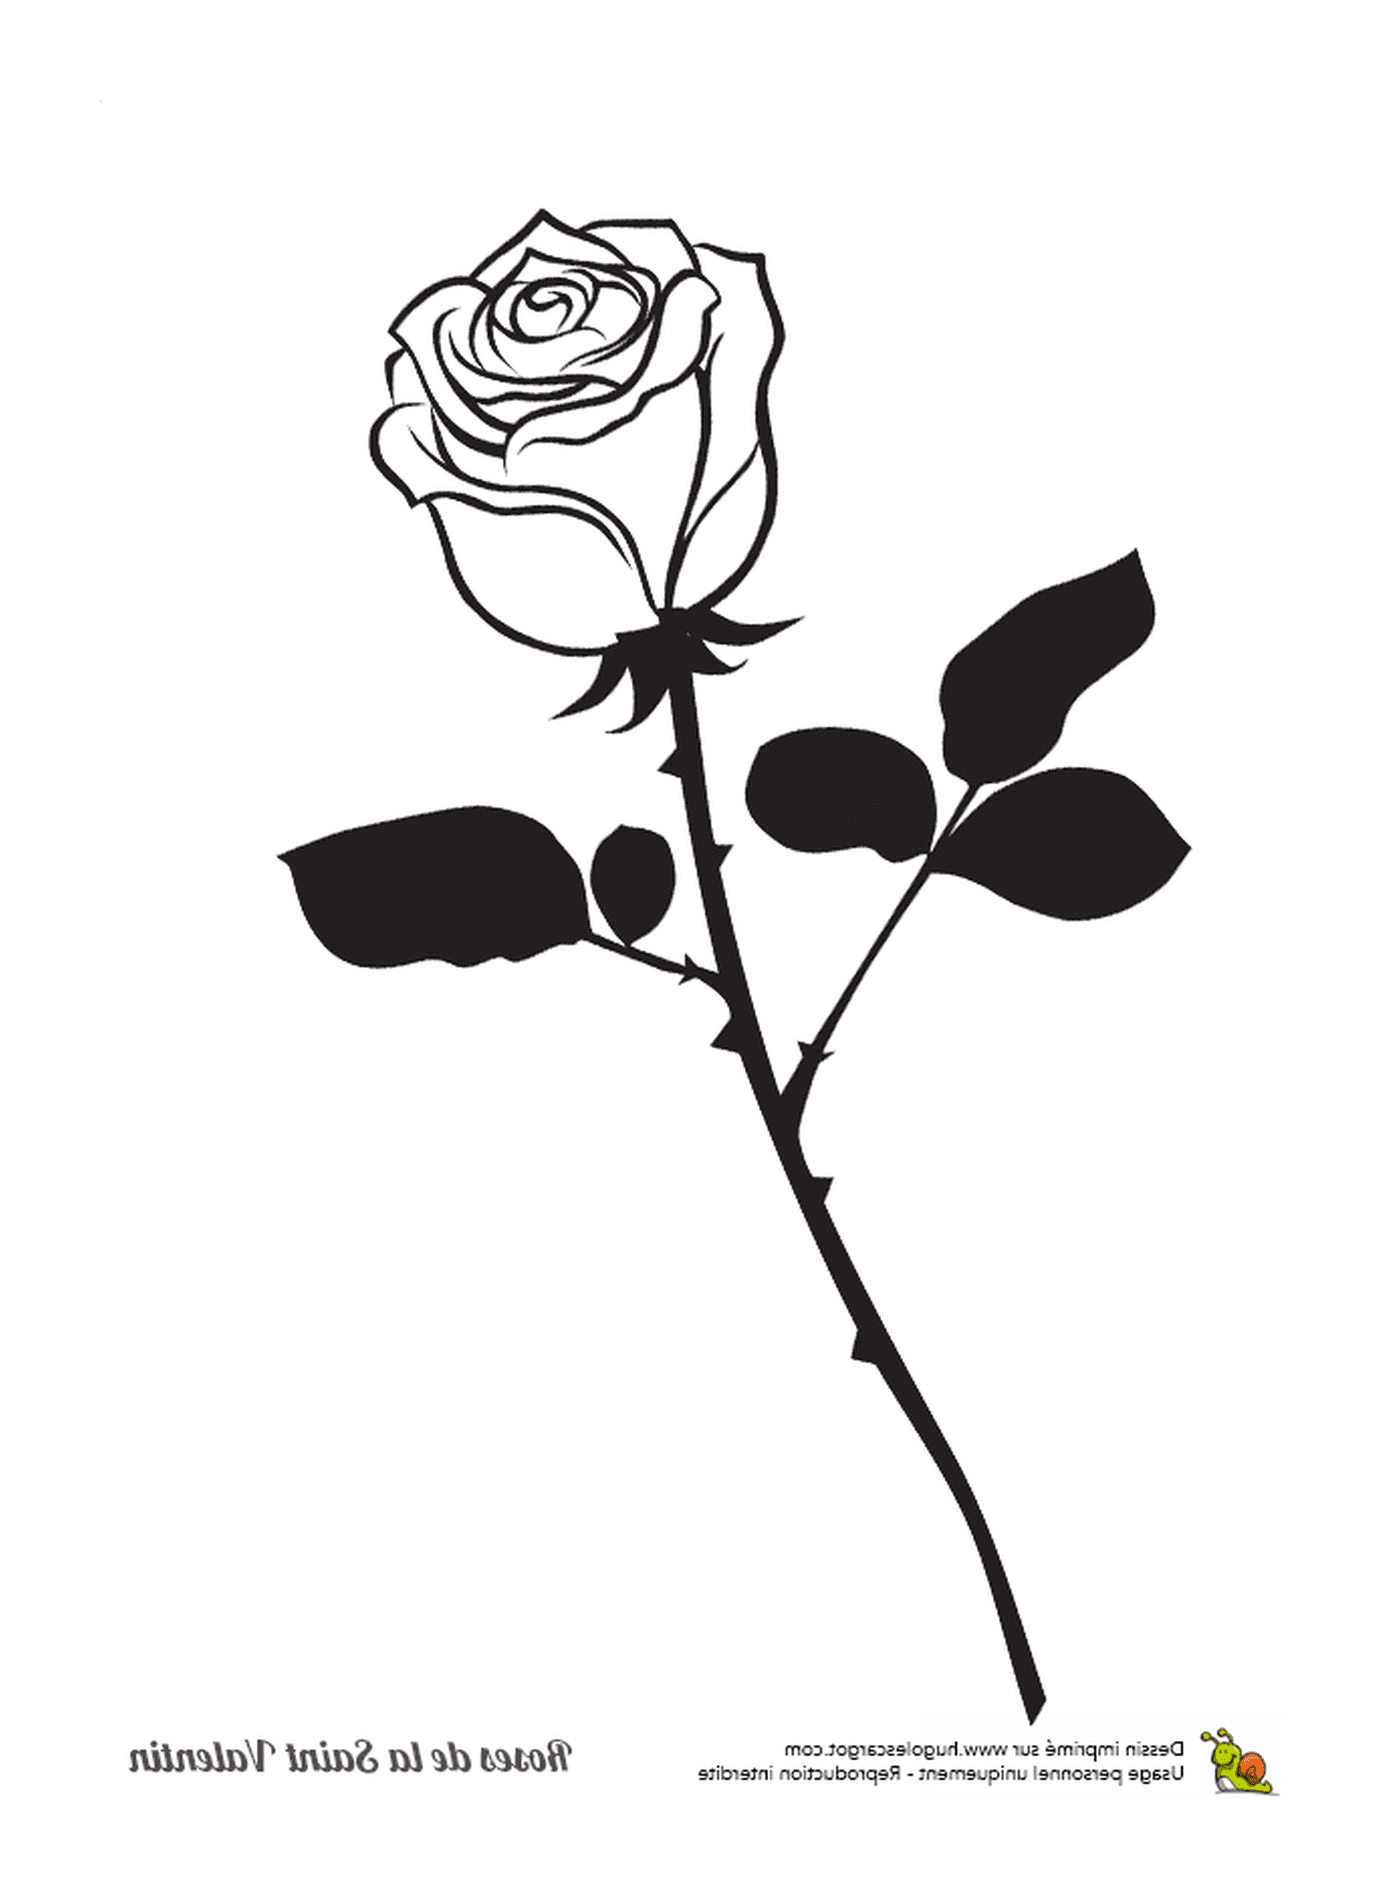  One rose alone 